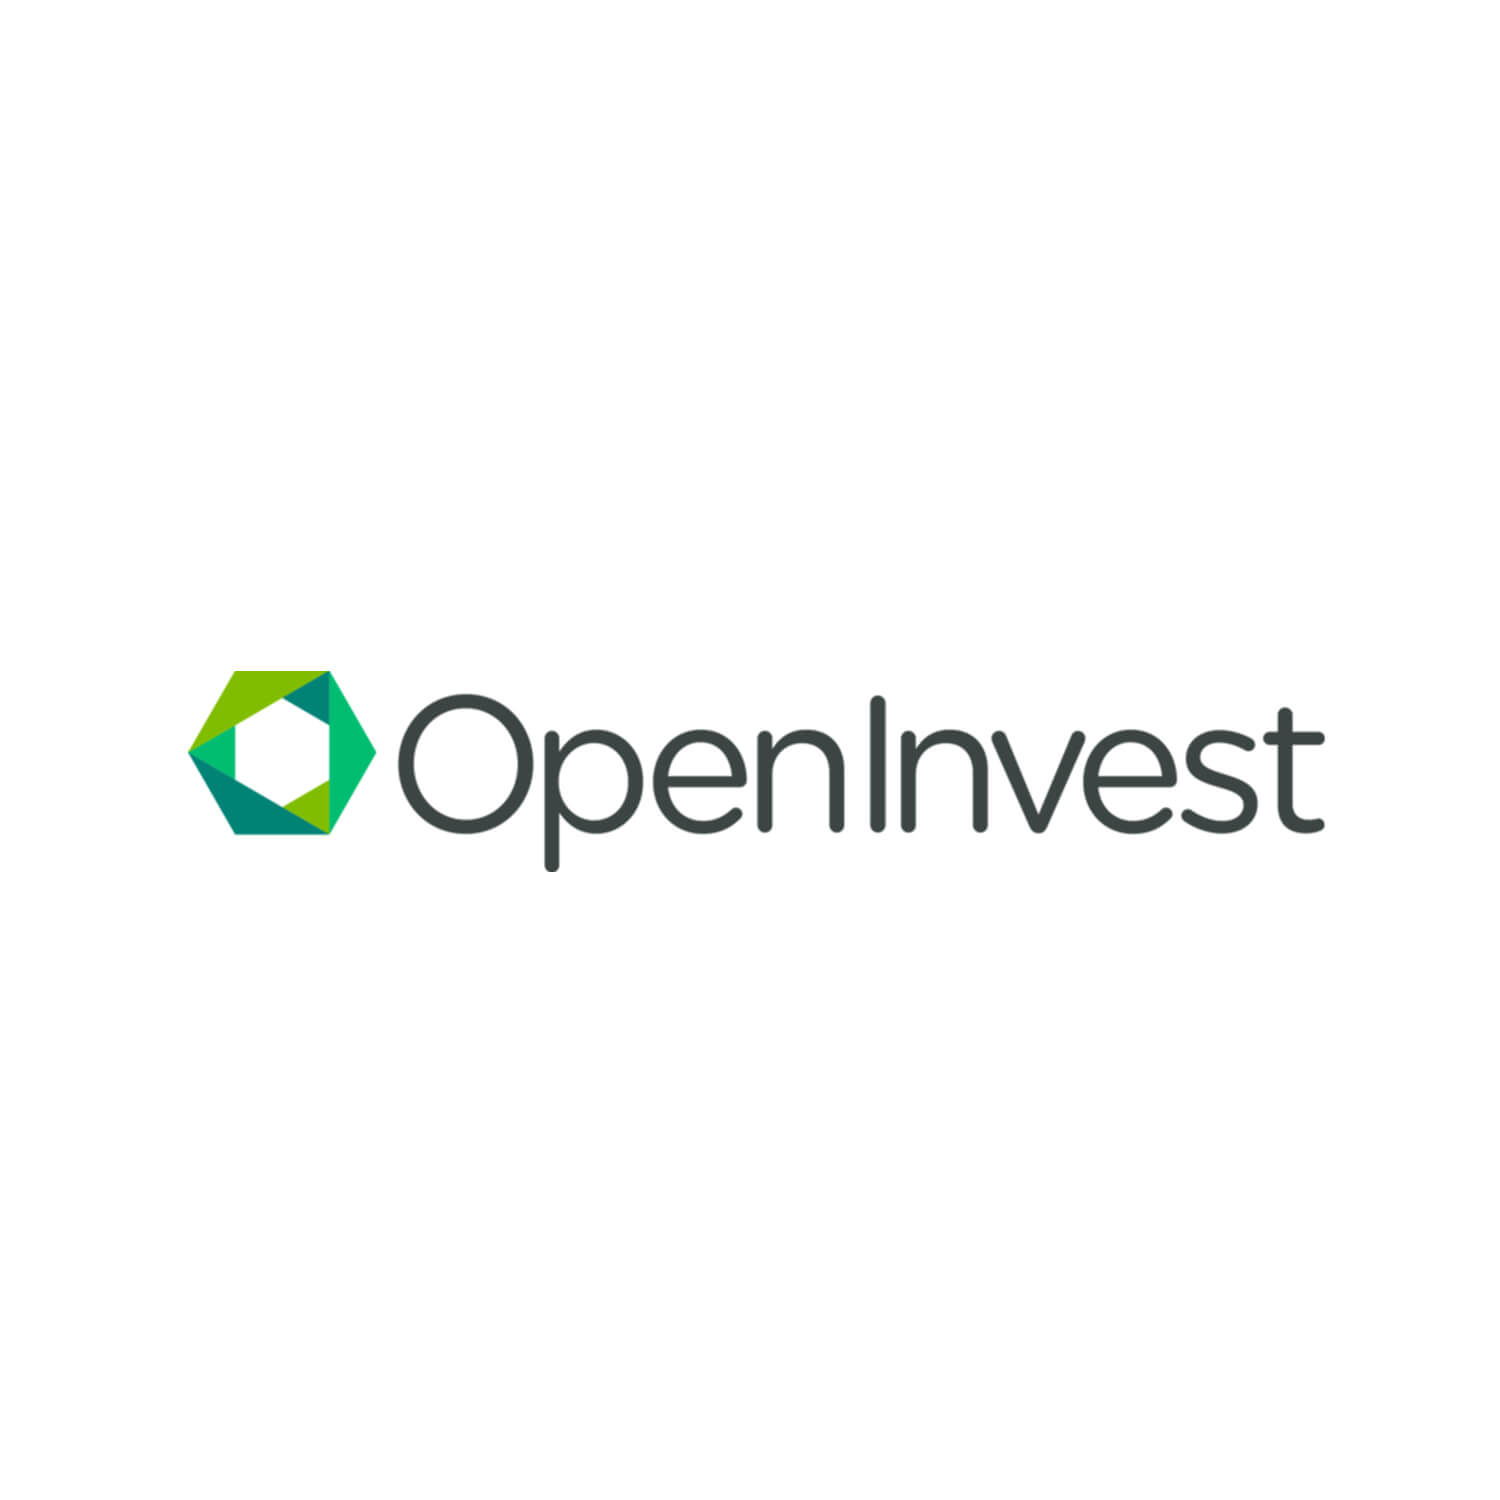 Openinvest